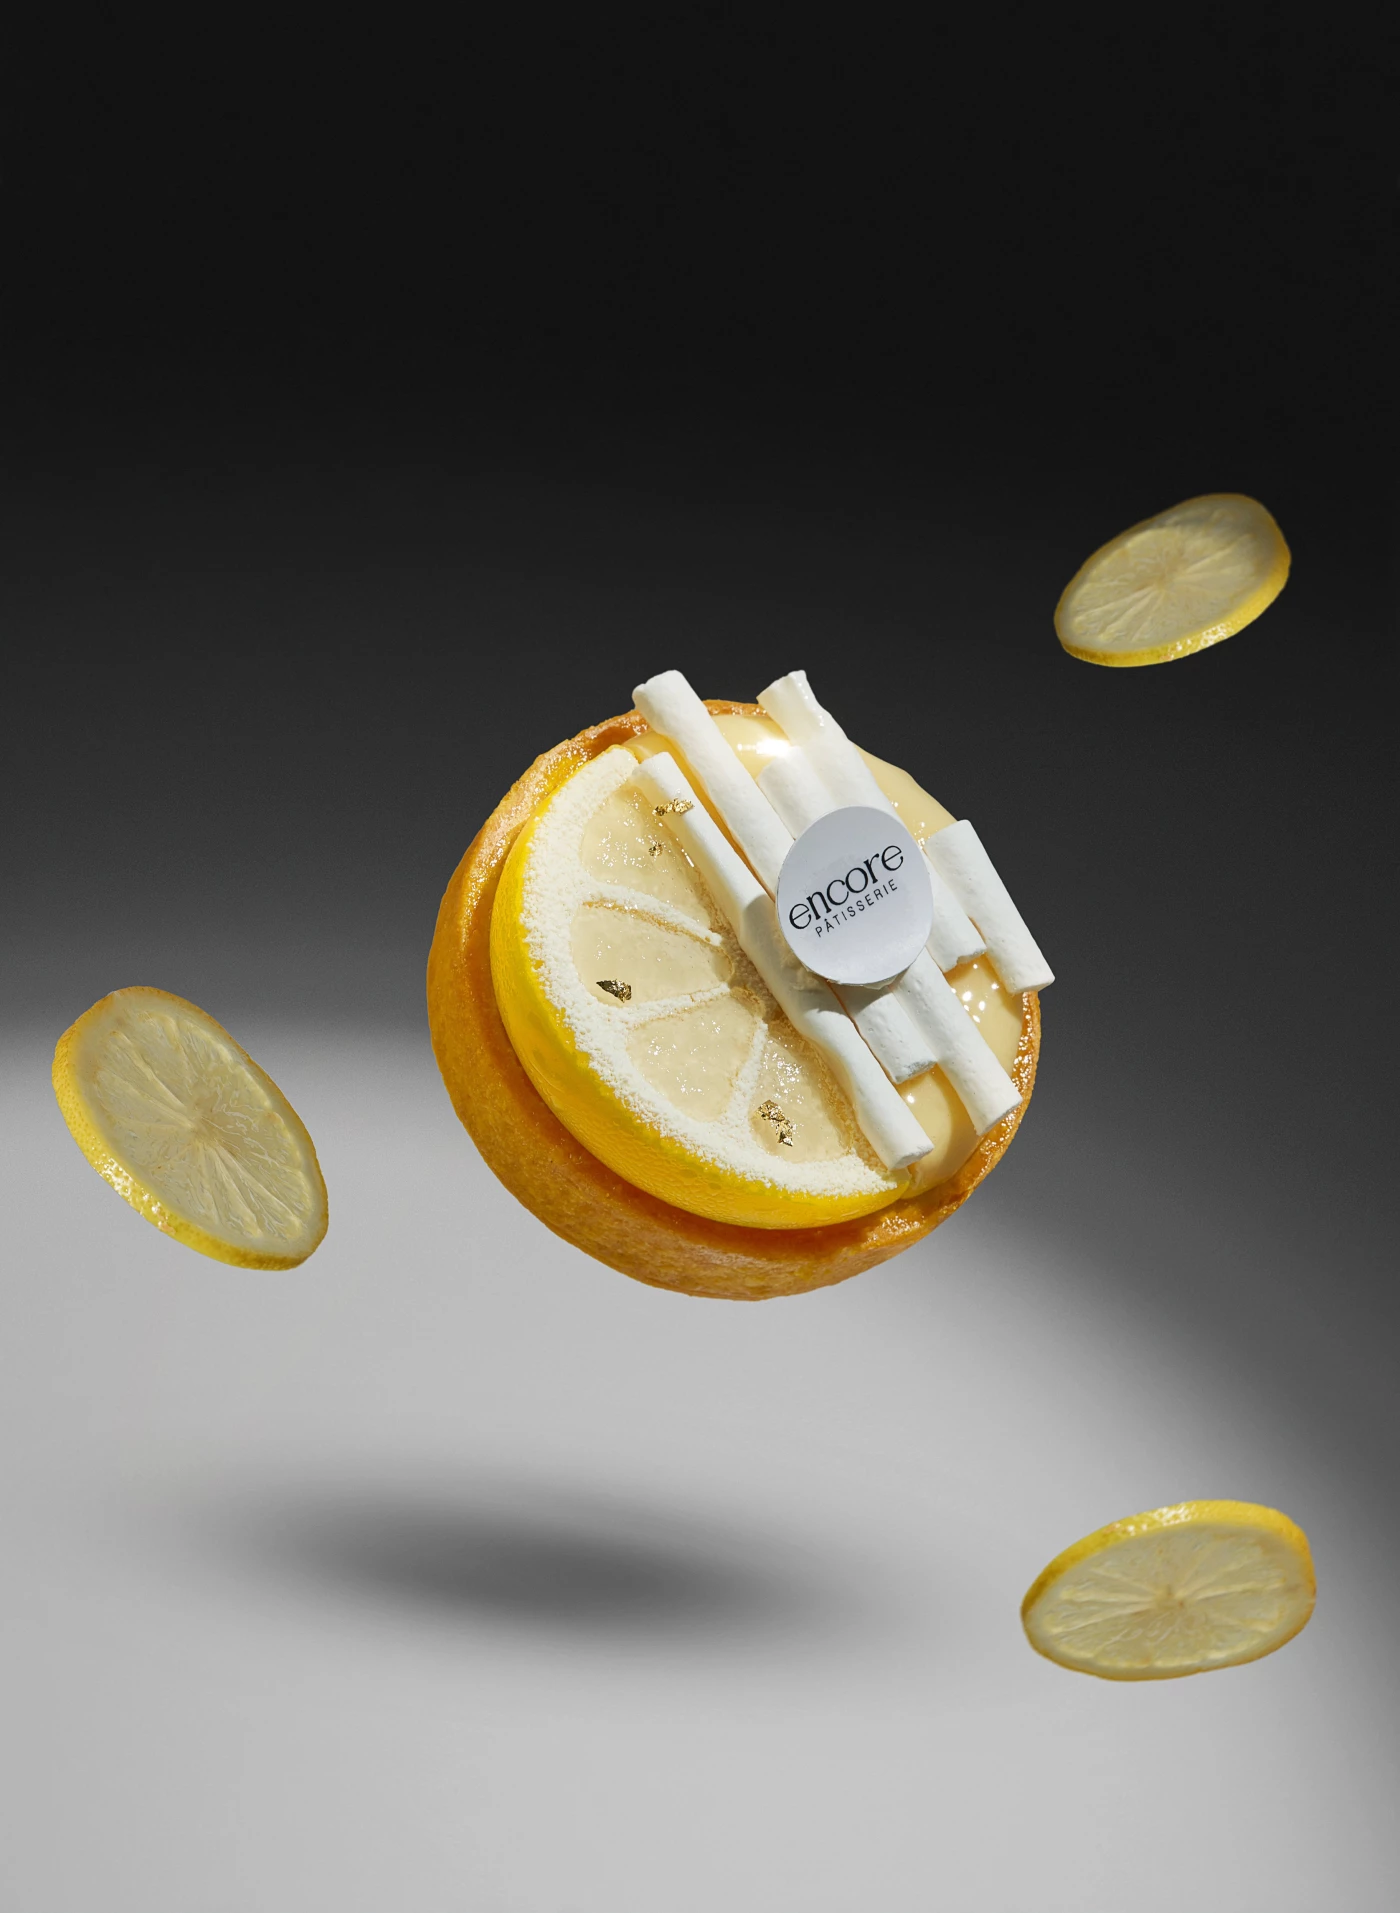 'Tart sweetness encrusted in a golden crust, this lemon tart captures the sunny radiance of citrus....